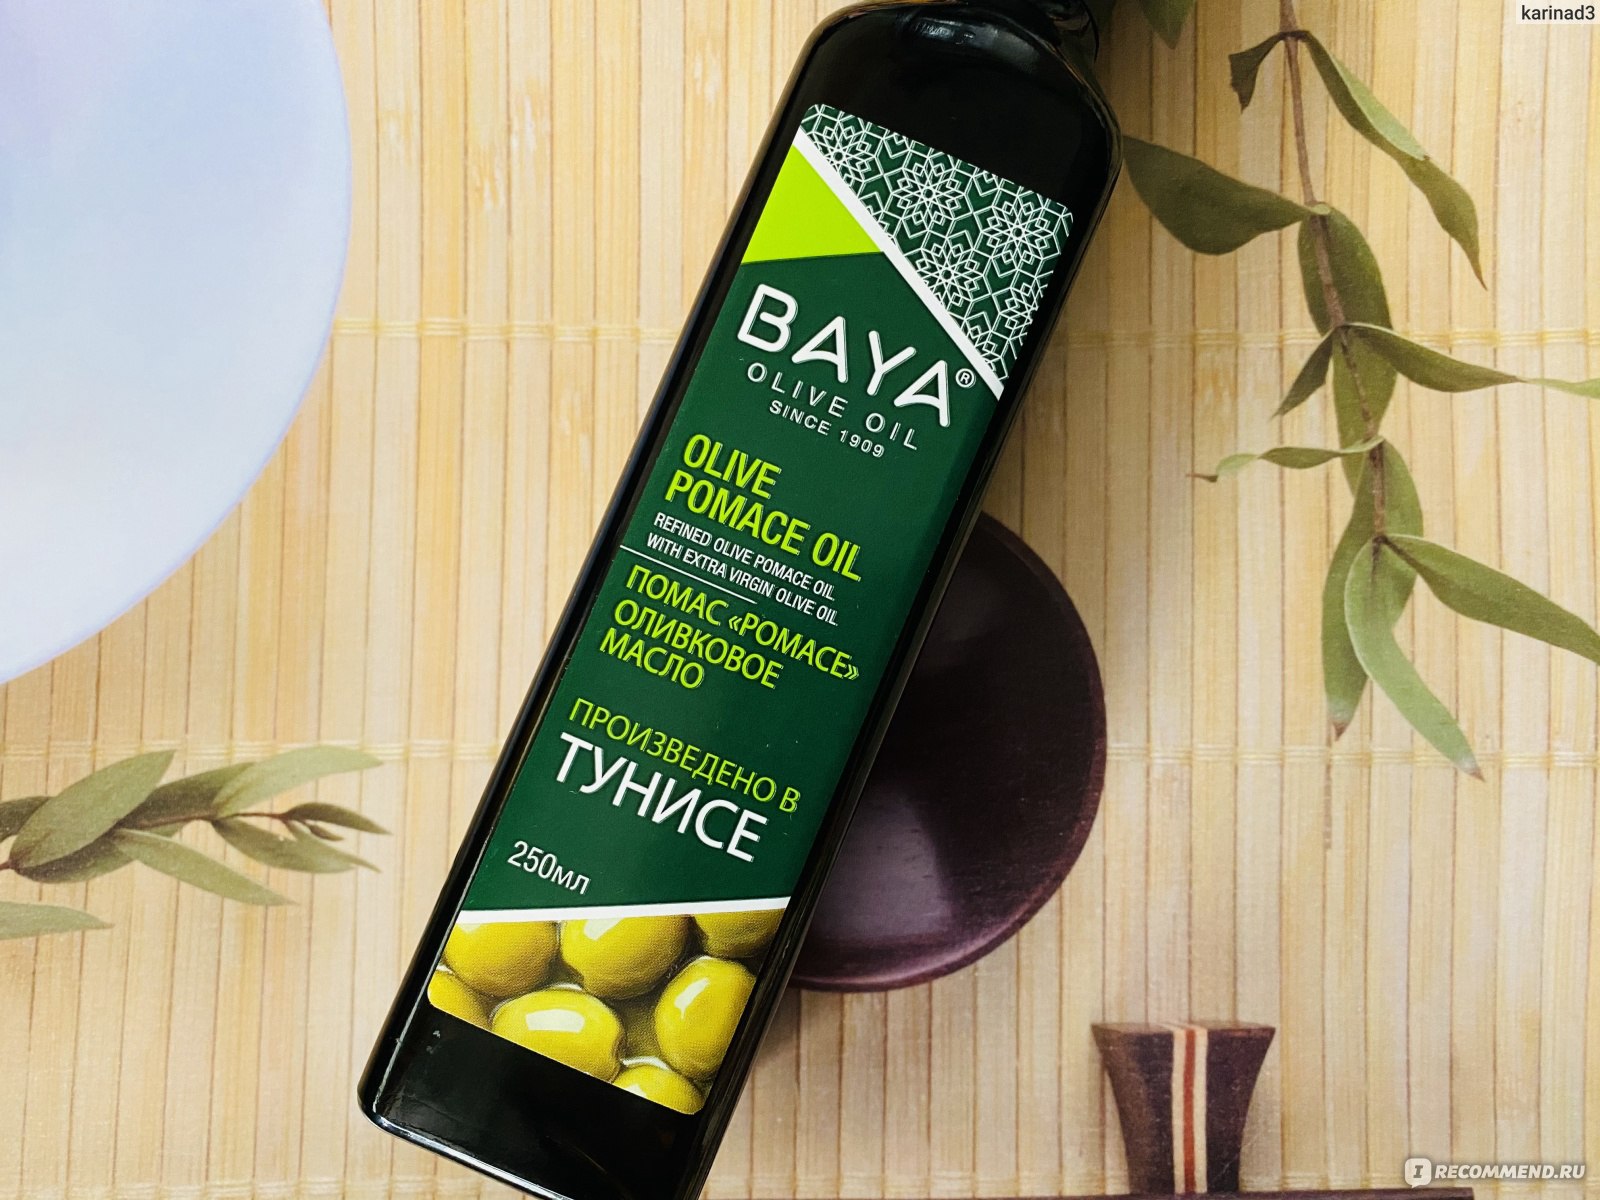 Оливковое масло baya